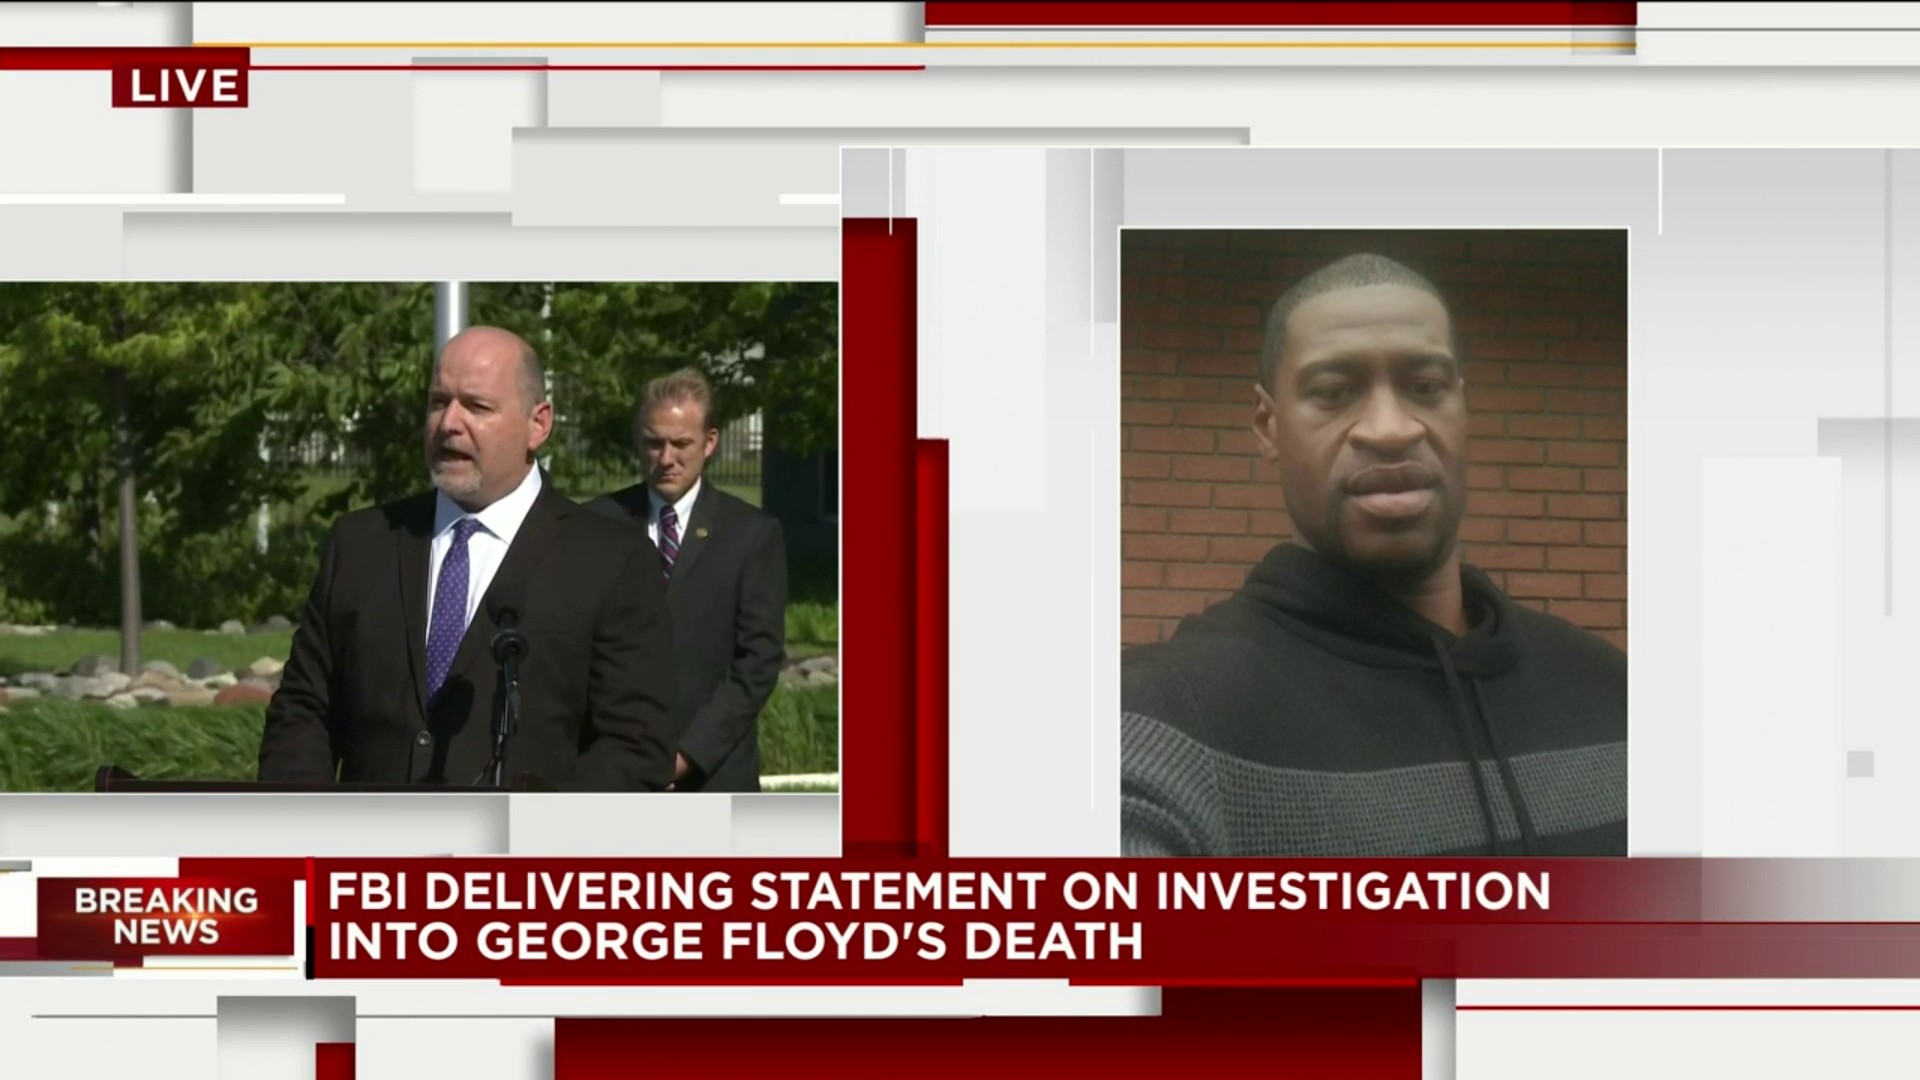 Nintendo issues a statement on the murder of George Floyd - NintendObserver